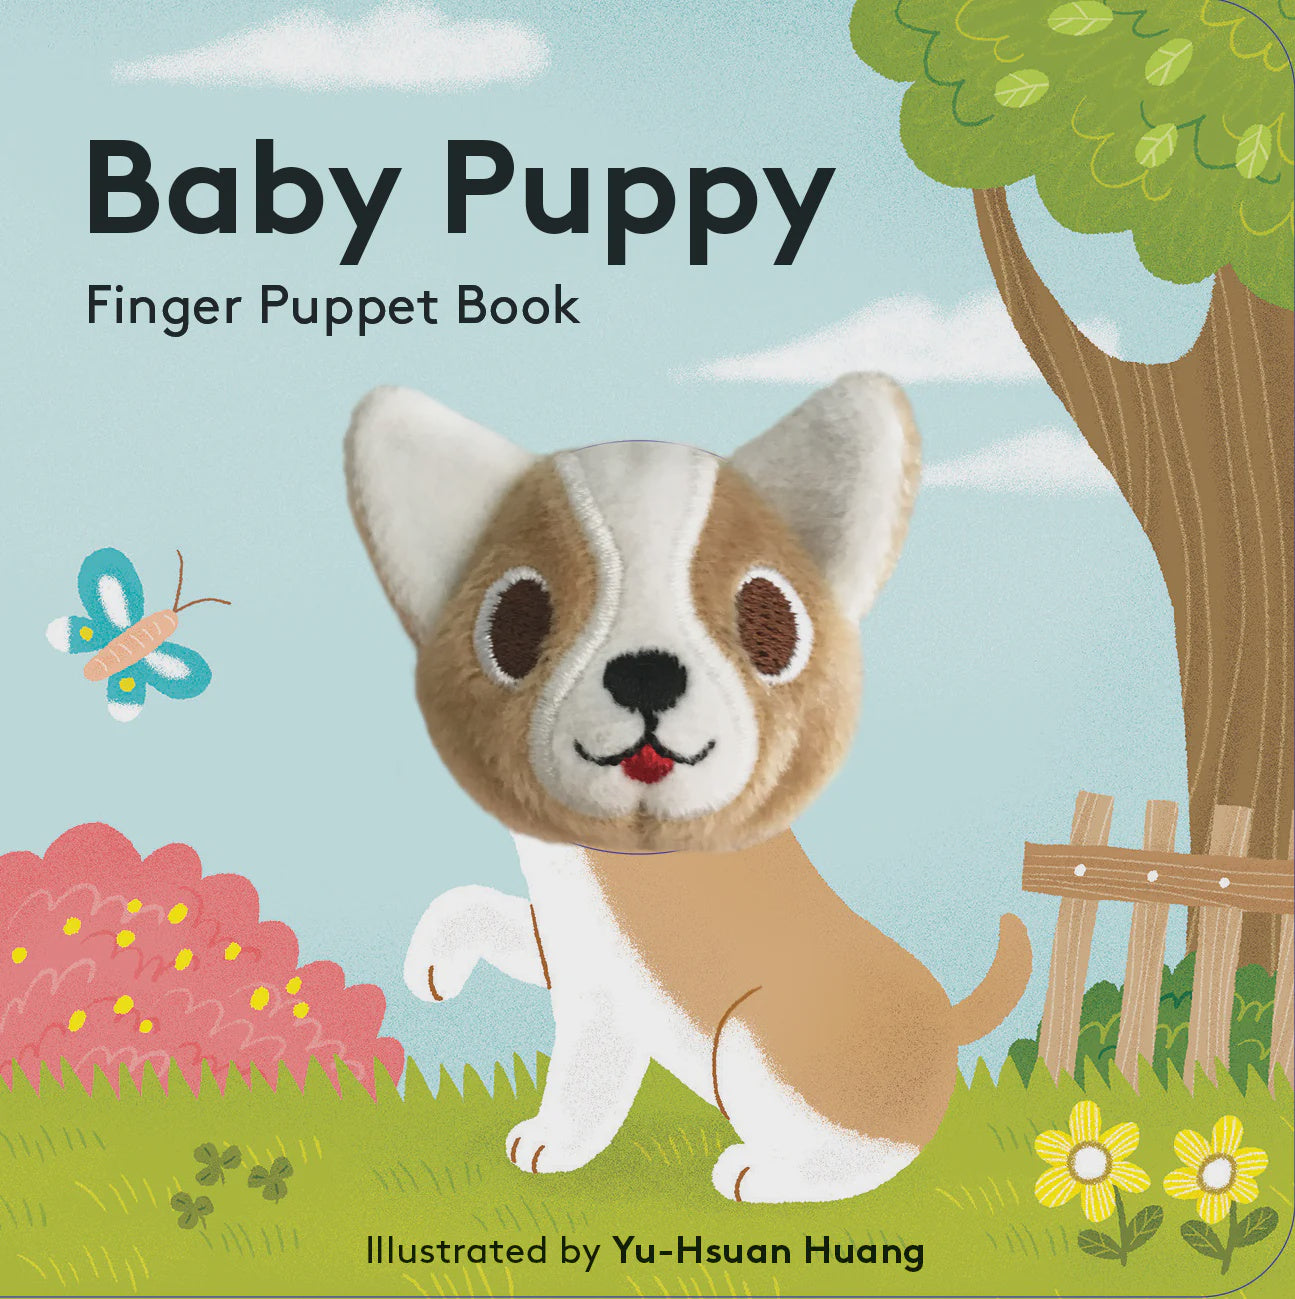 Finger Puppet Book: Baby Puppy